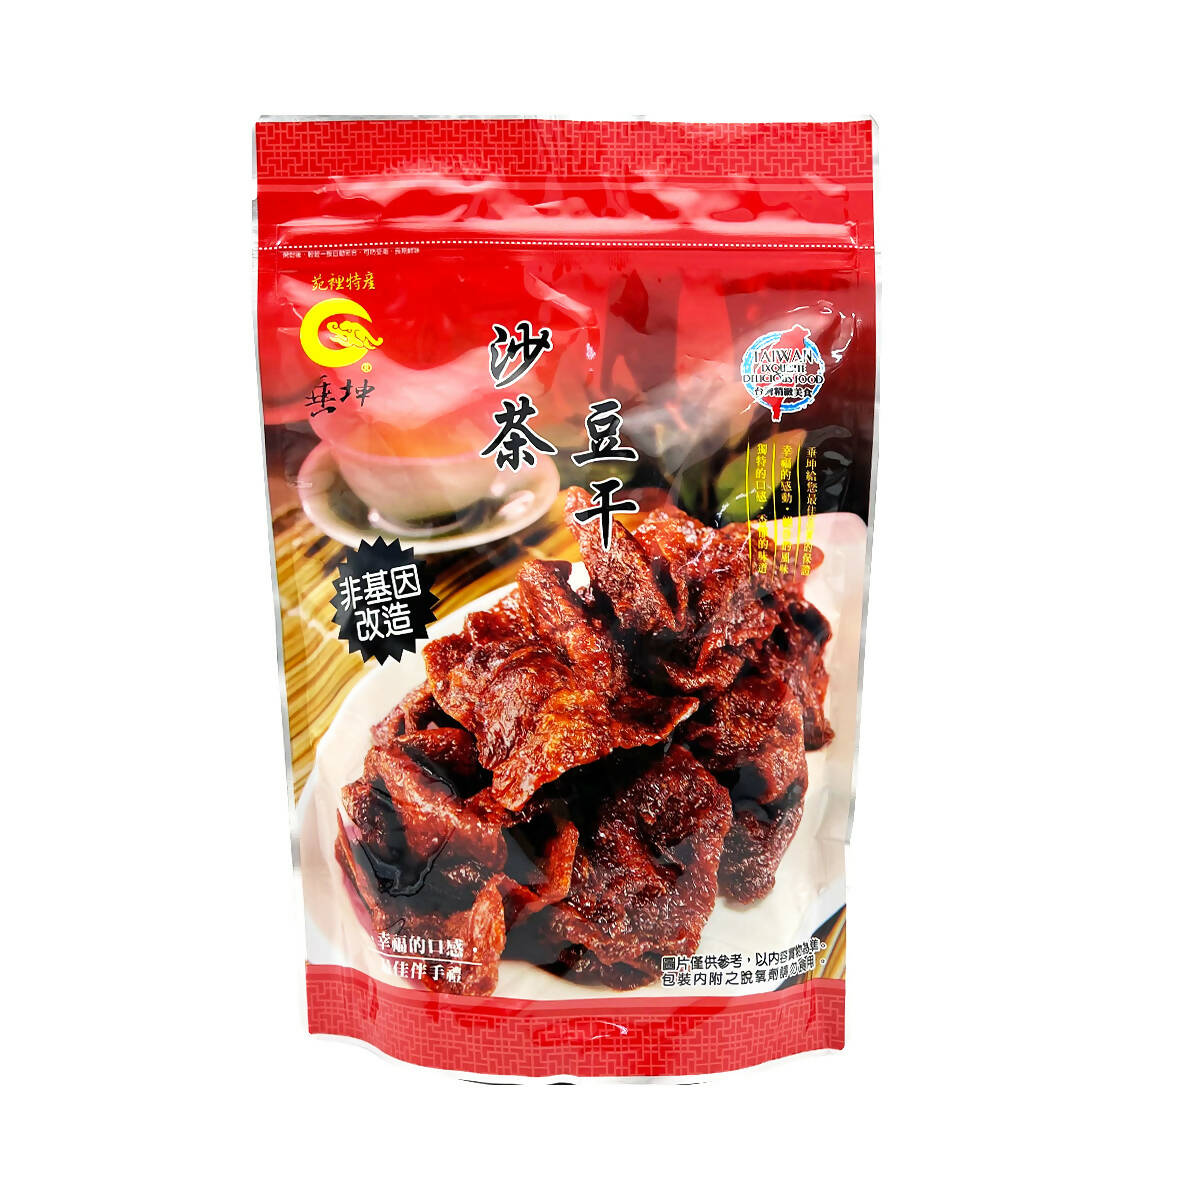 Taiwan Direct Mail【Chui Kun】 CHUEI KUN Sand Tea Dried Tofu 430g 